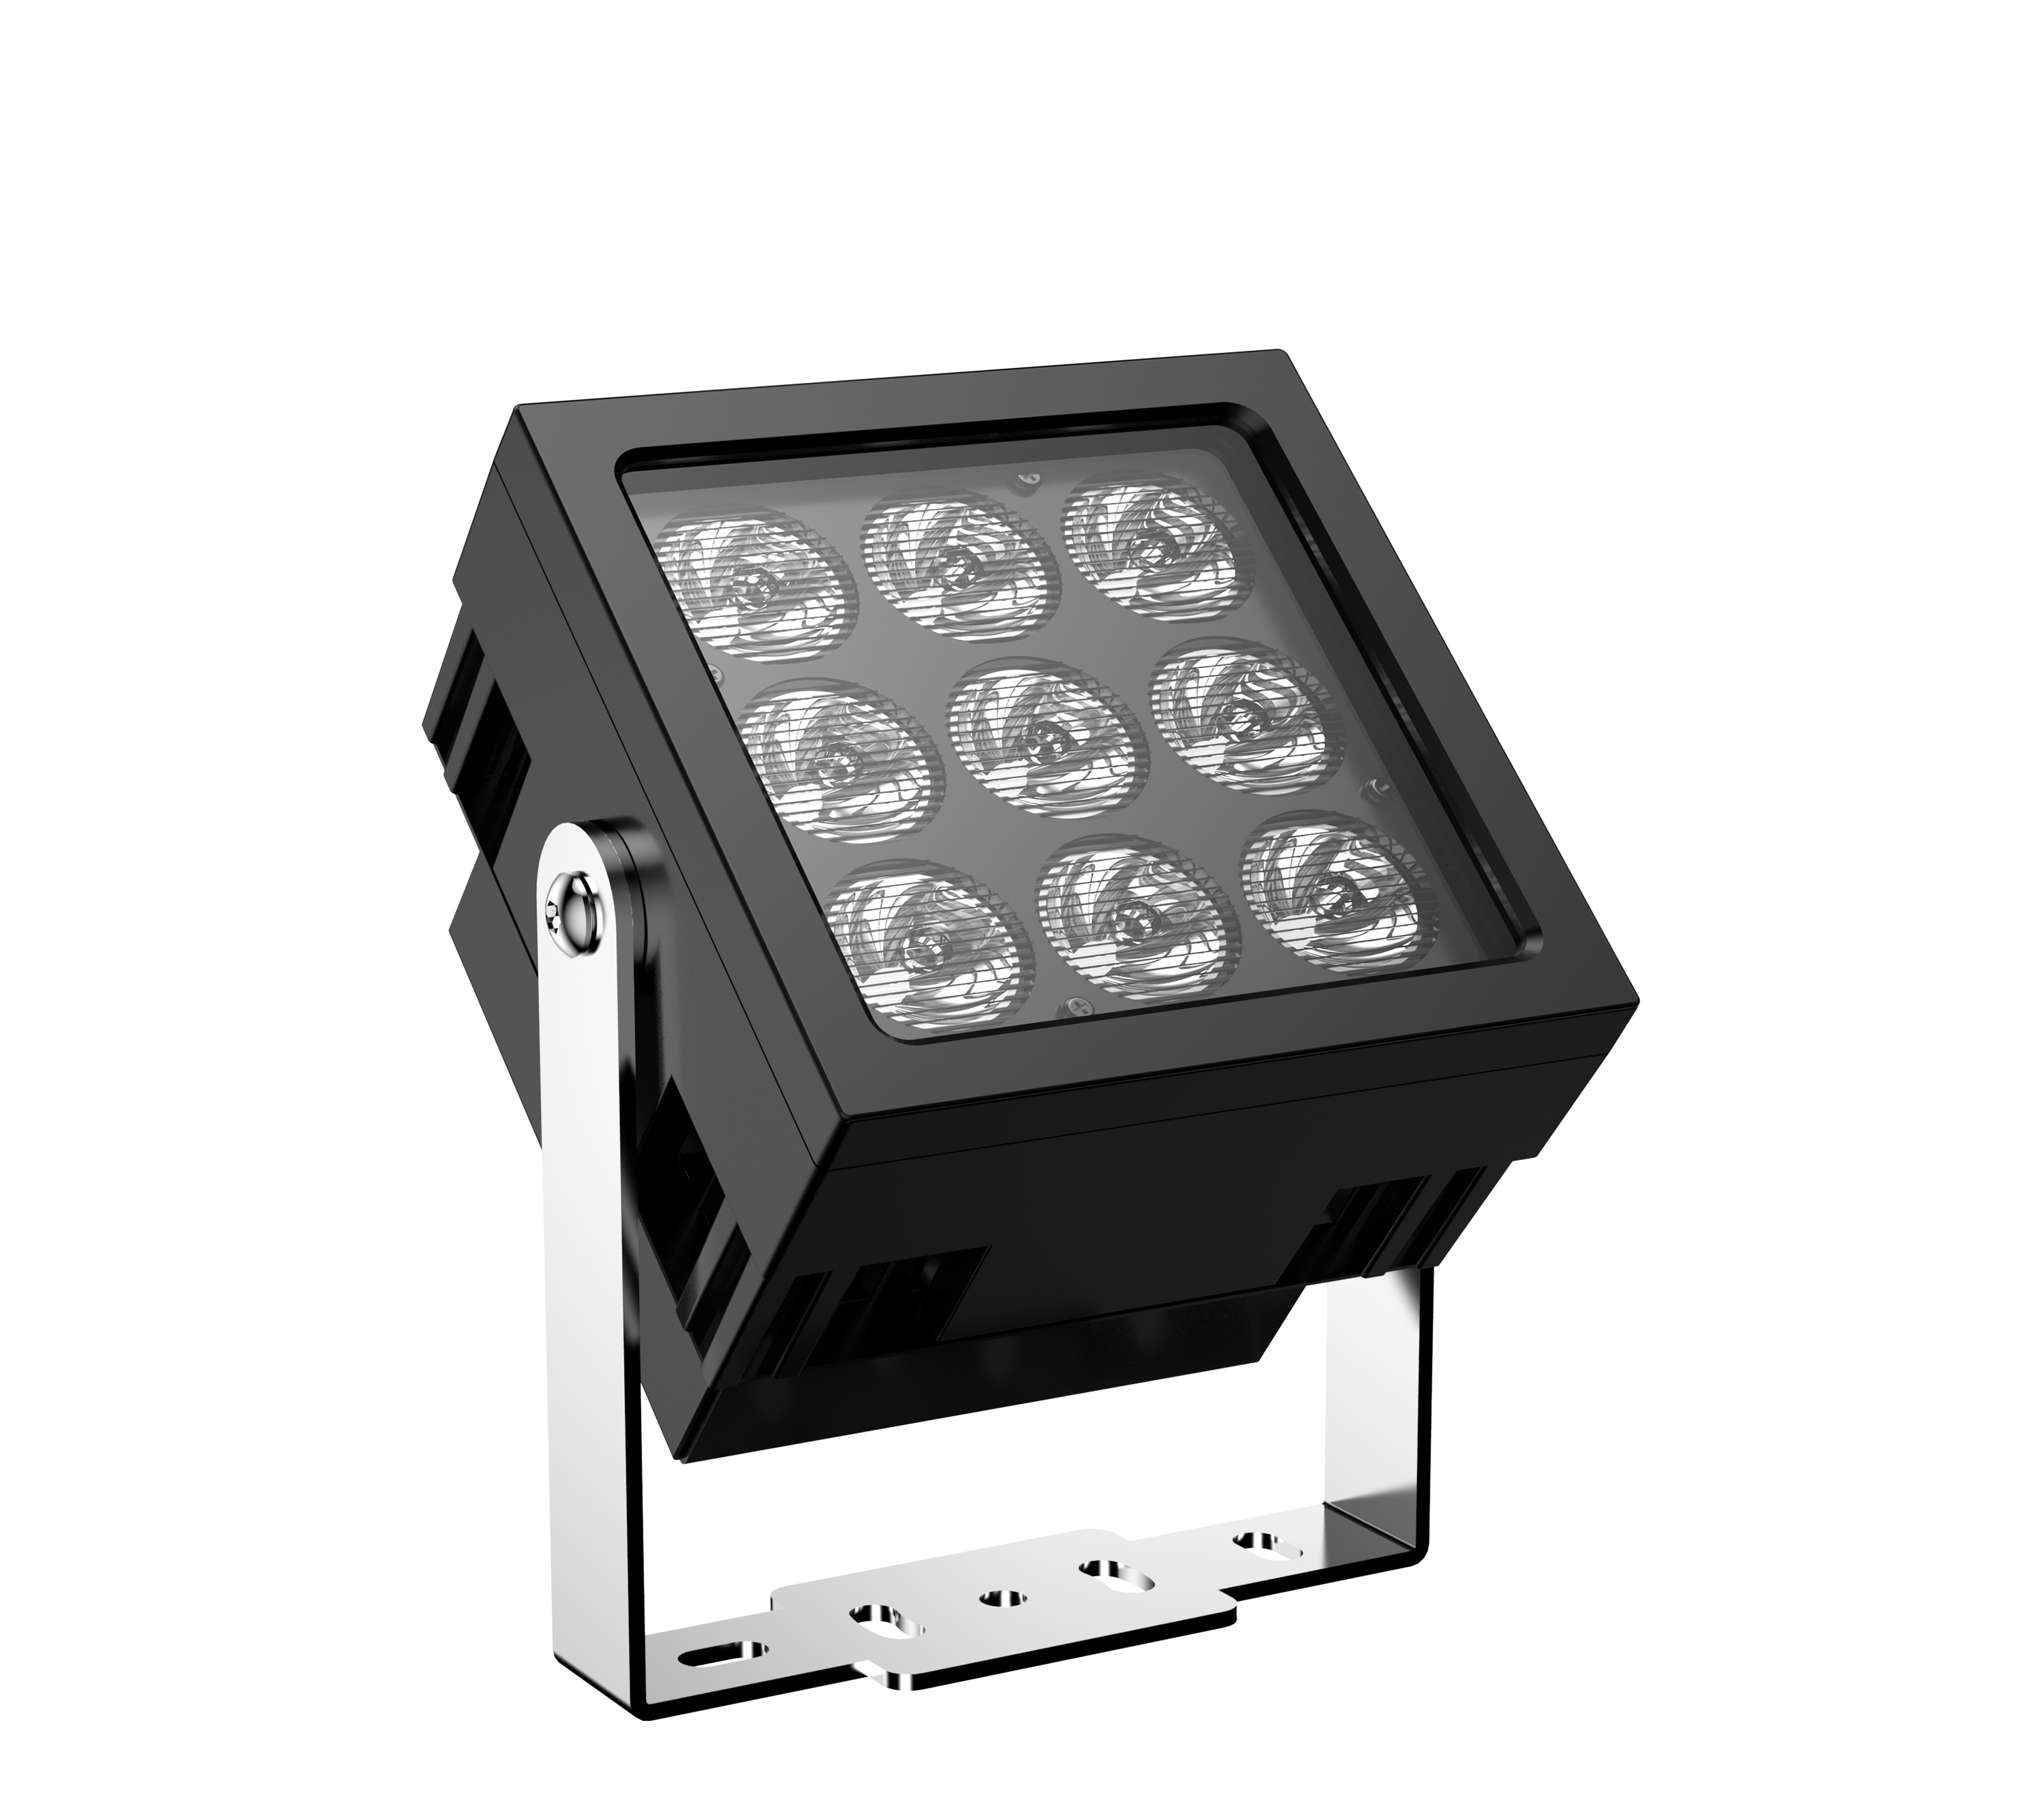 TG150-2A-LED地埋灯,LED洗墙灯, LED线条灯, LED投光灯,户外亮化,深圳市亮佳美照明有限公司